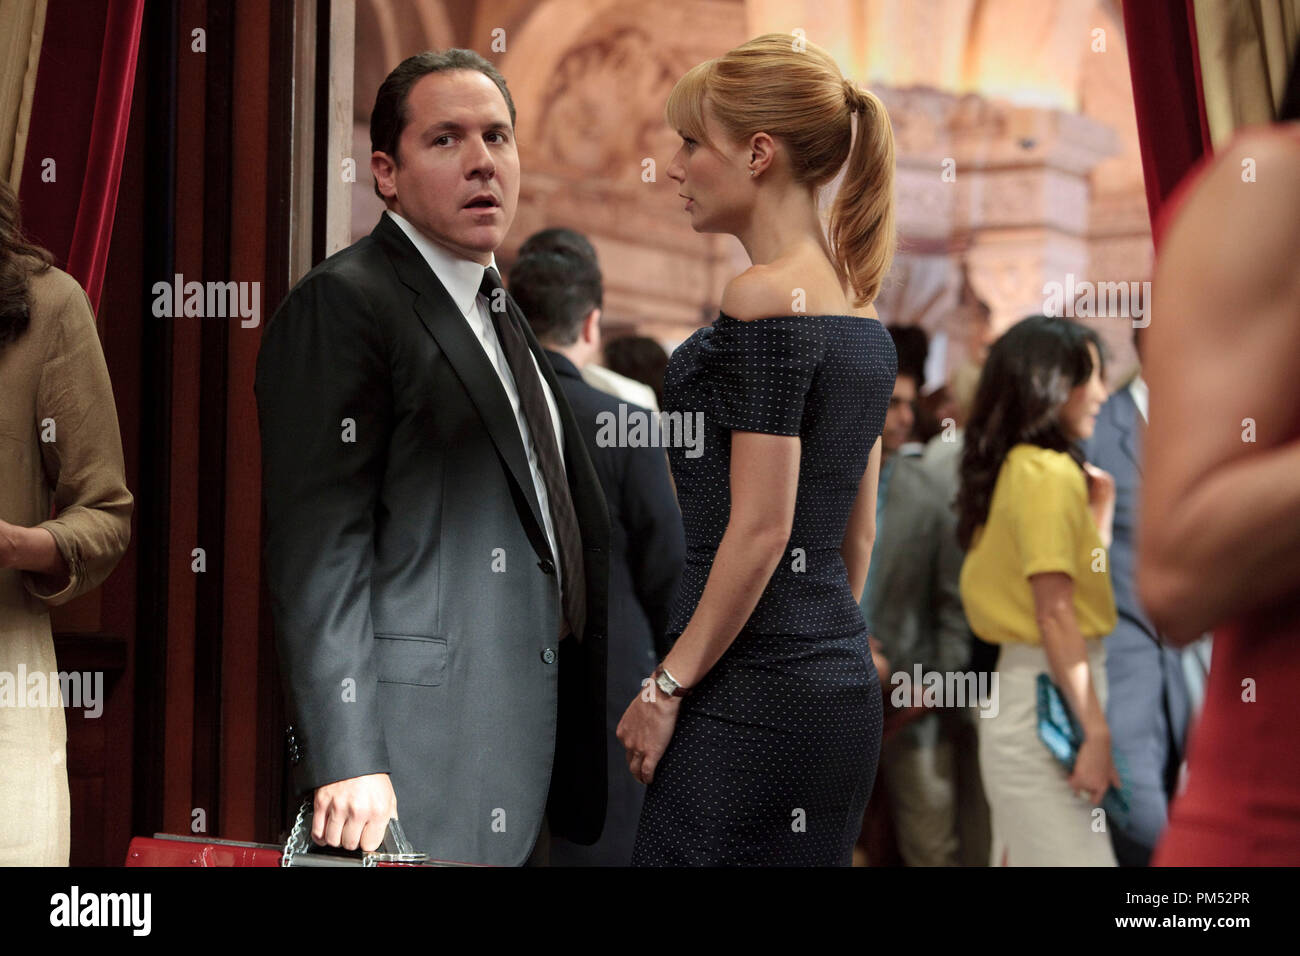 Left to right: Happy Hogan (Jon Favreau) and Pepper Potts (Gwyneth Paltrow)  in “Iron Man 2” Stock Photo - Alamy